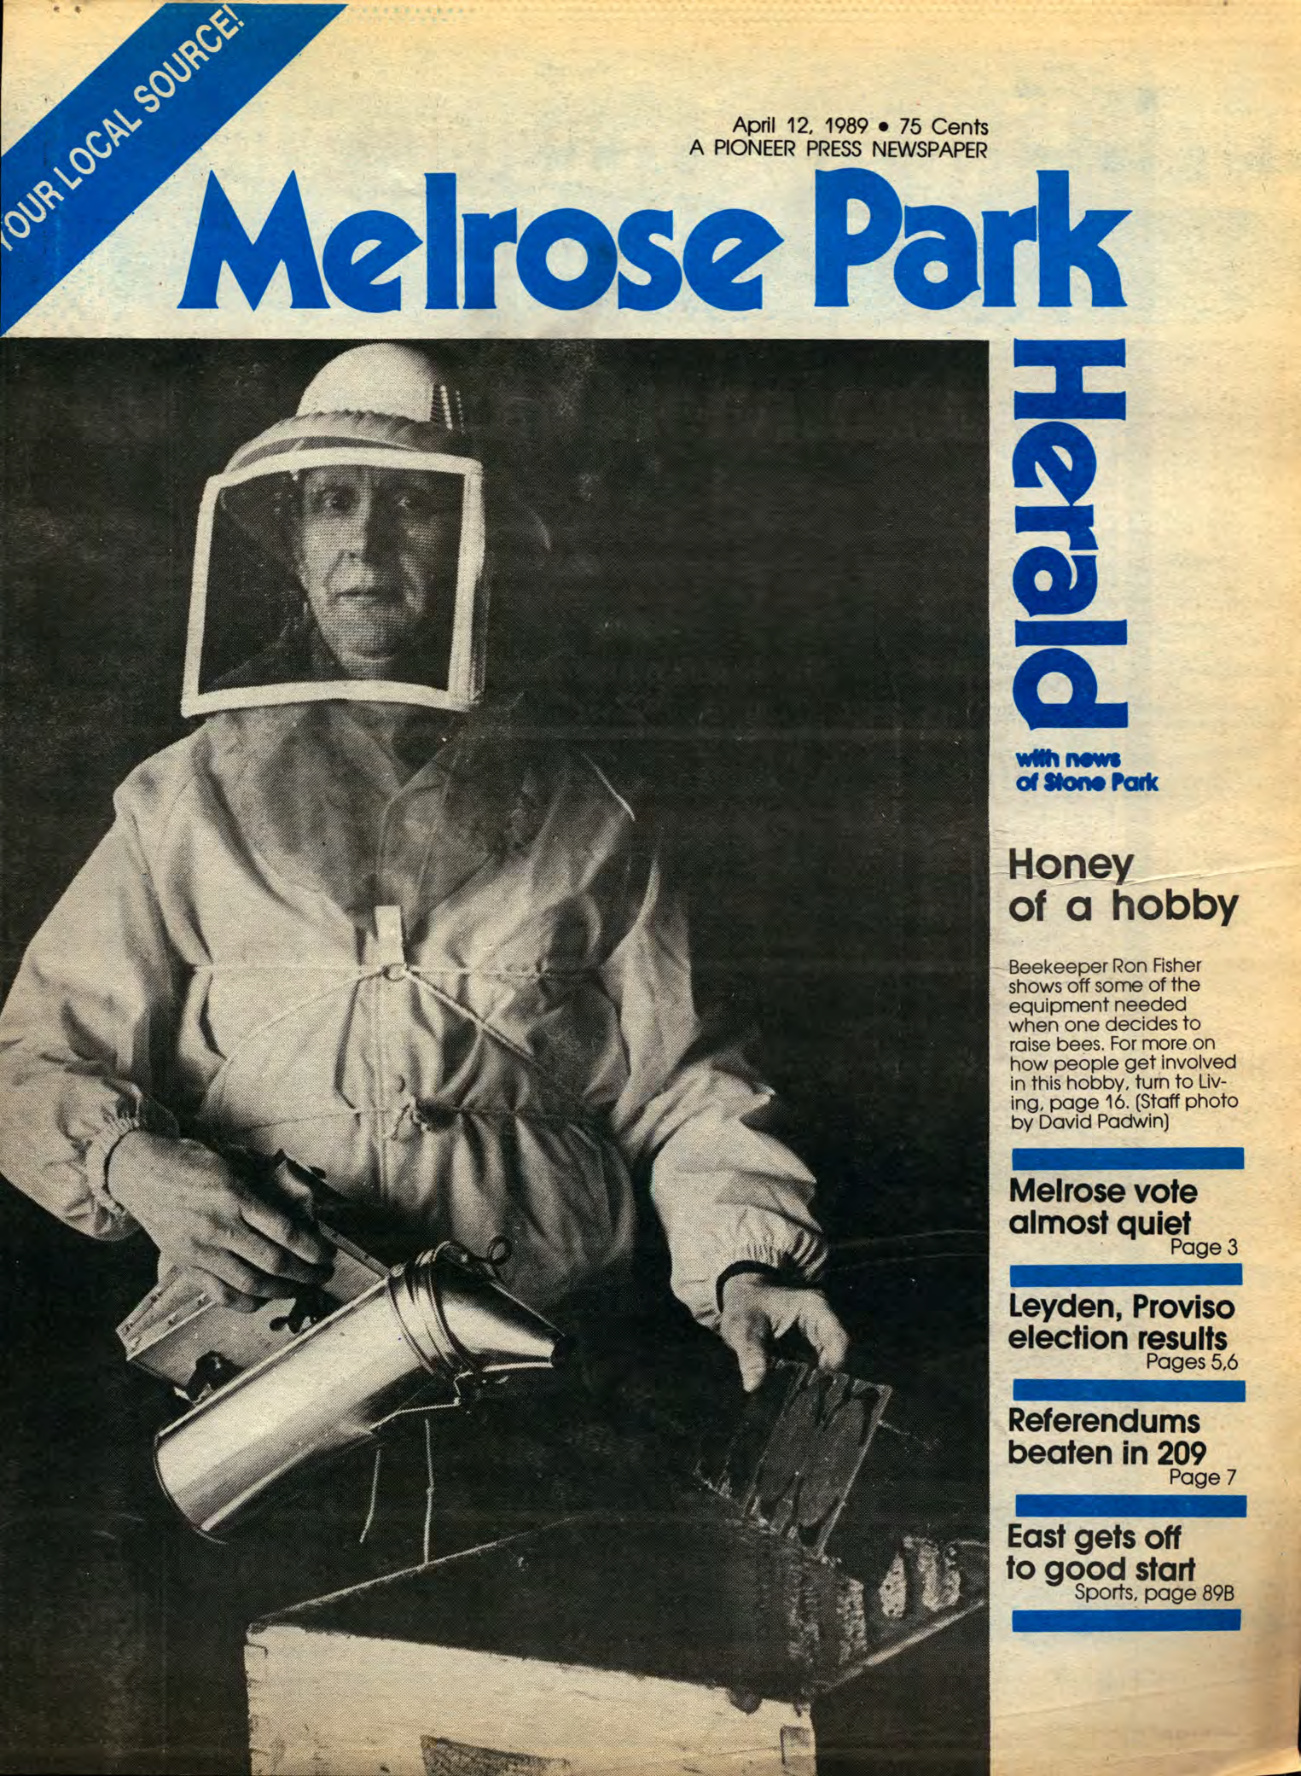 The Herald – 19890412